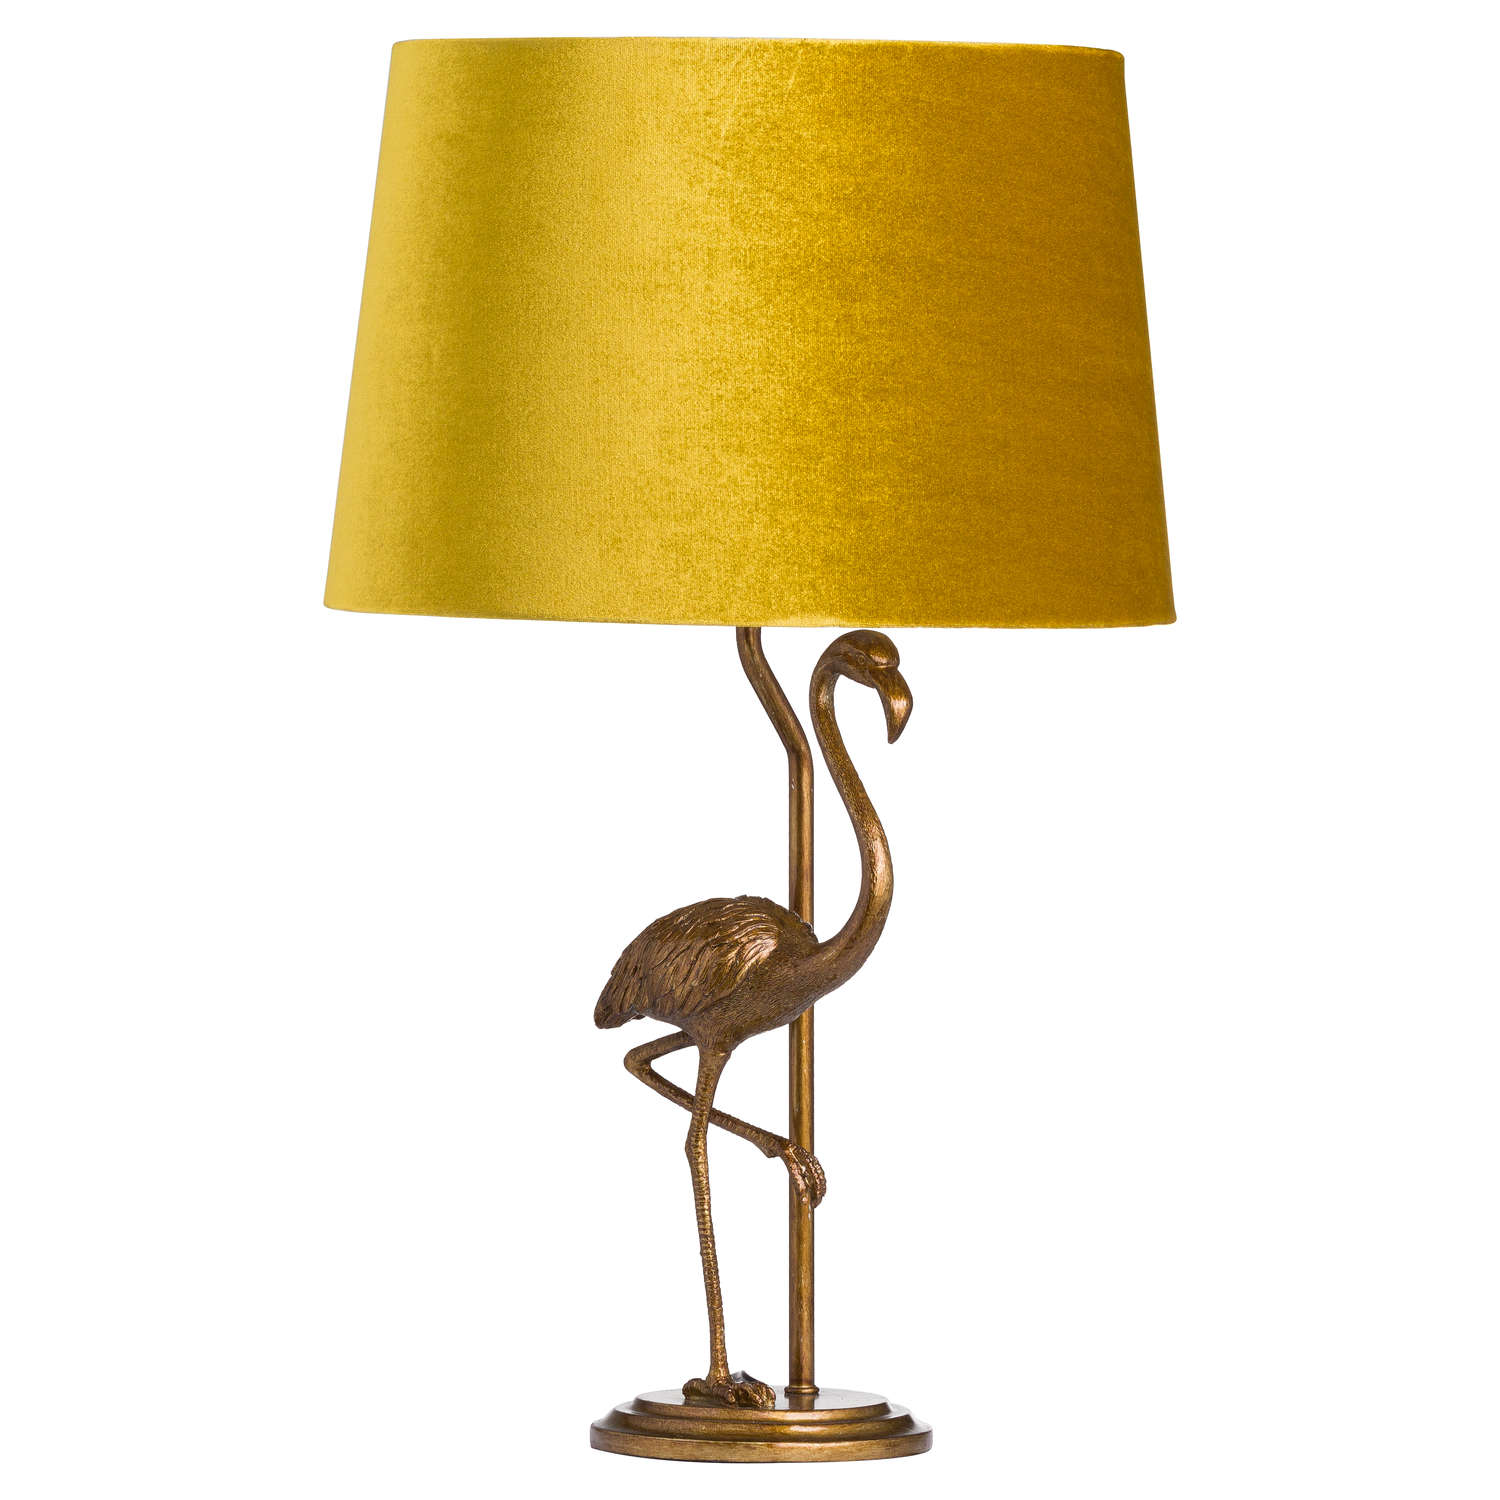 Antique Gold Flamingo Lamp With Mustard Velvet Shade - Image 1